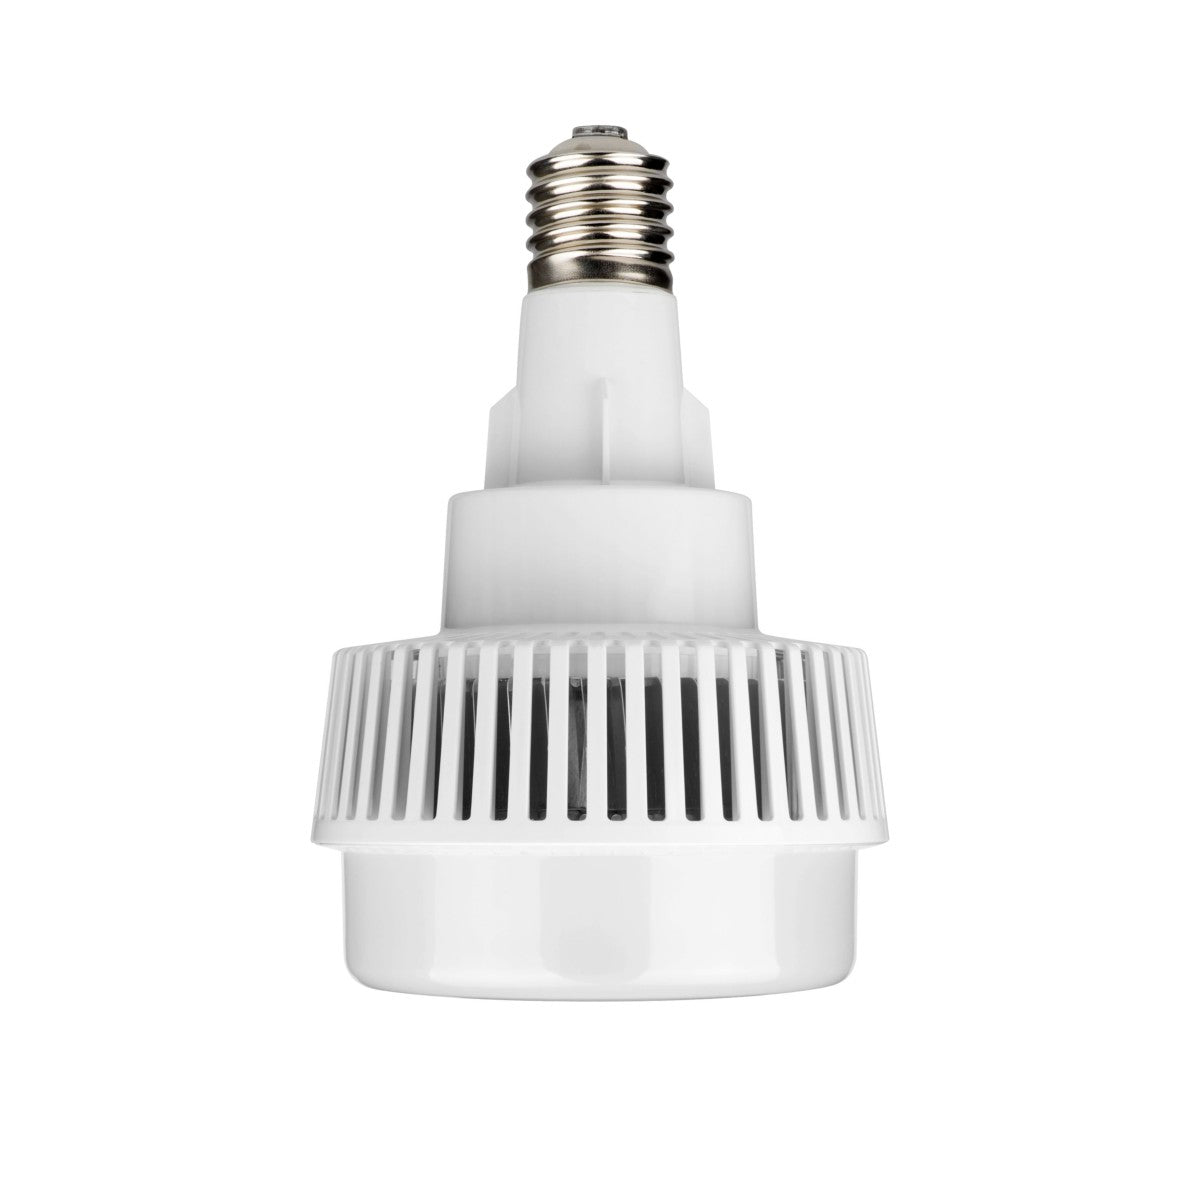 Ampoule LED Cloche E40 / E27 120W 220V 120° - Silamp France